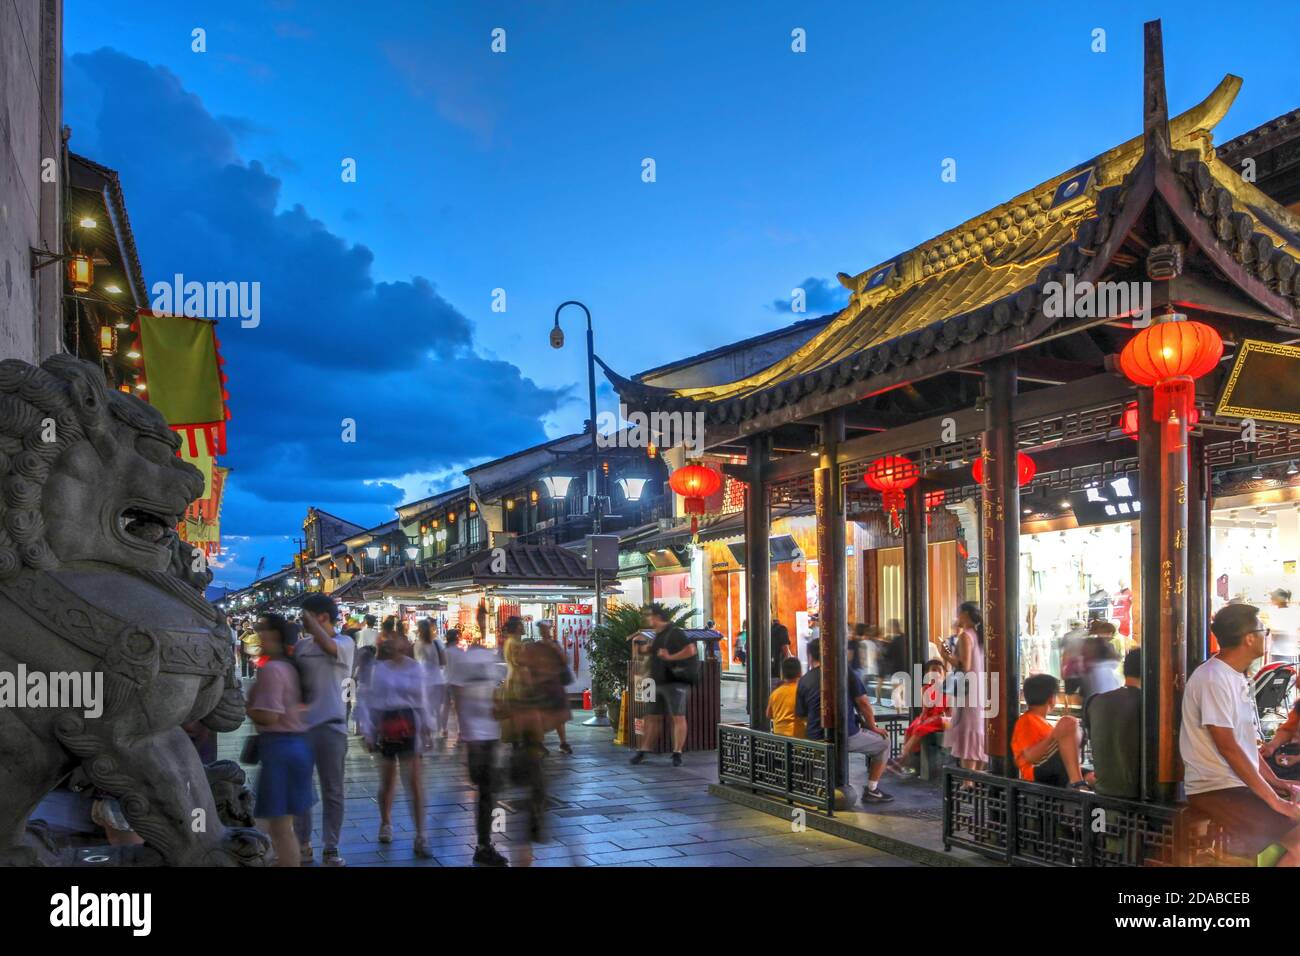 Scena notturna lungo la storica Hefang Street a Hangzhou, Cina, con l'ingresso a Hu Qing Yu Tang, una famosa medicina alle erbe cinesi. Foto Stock